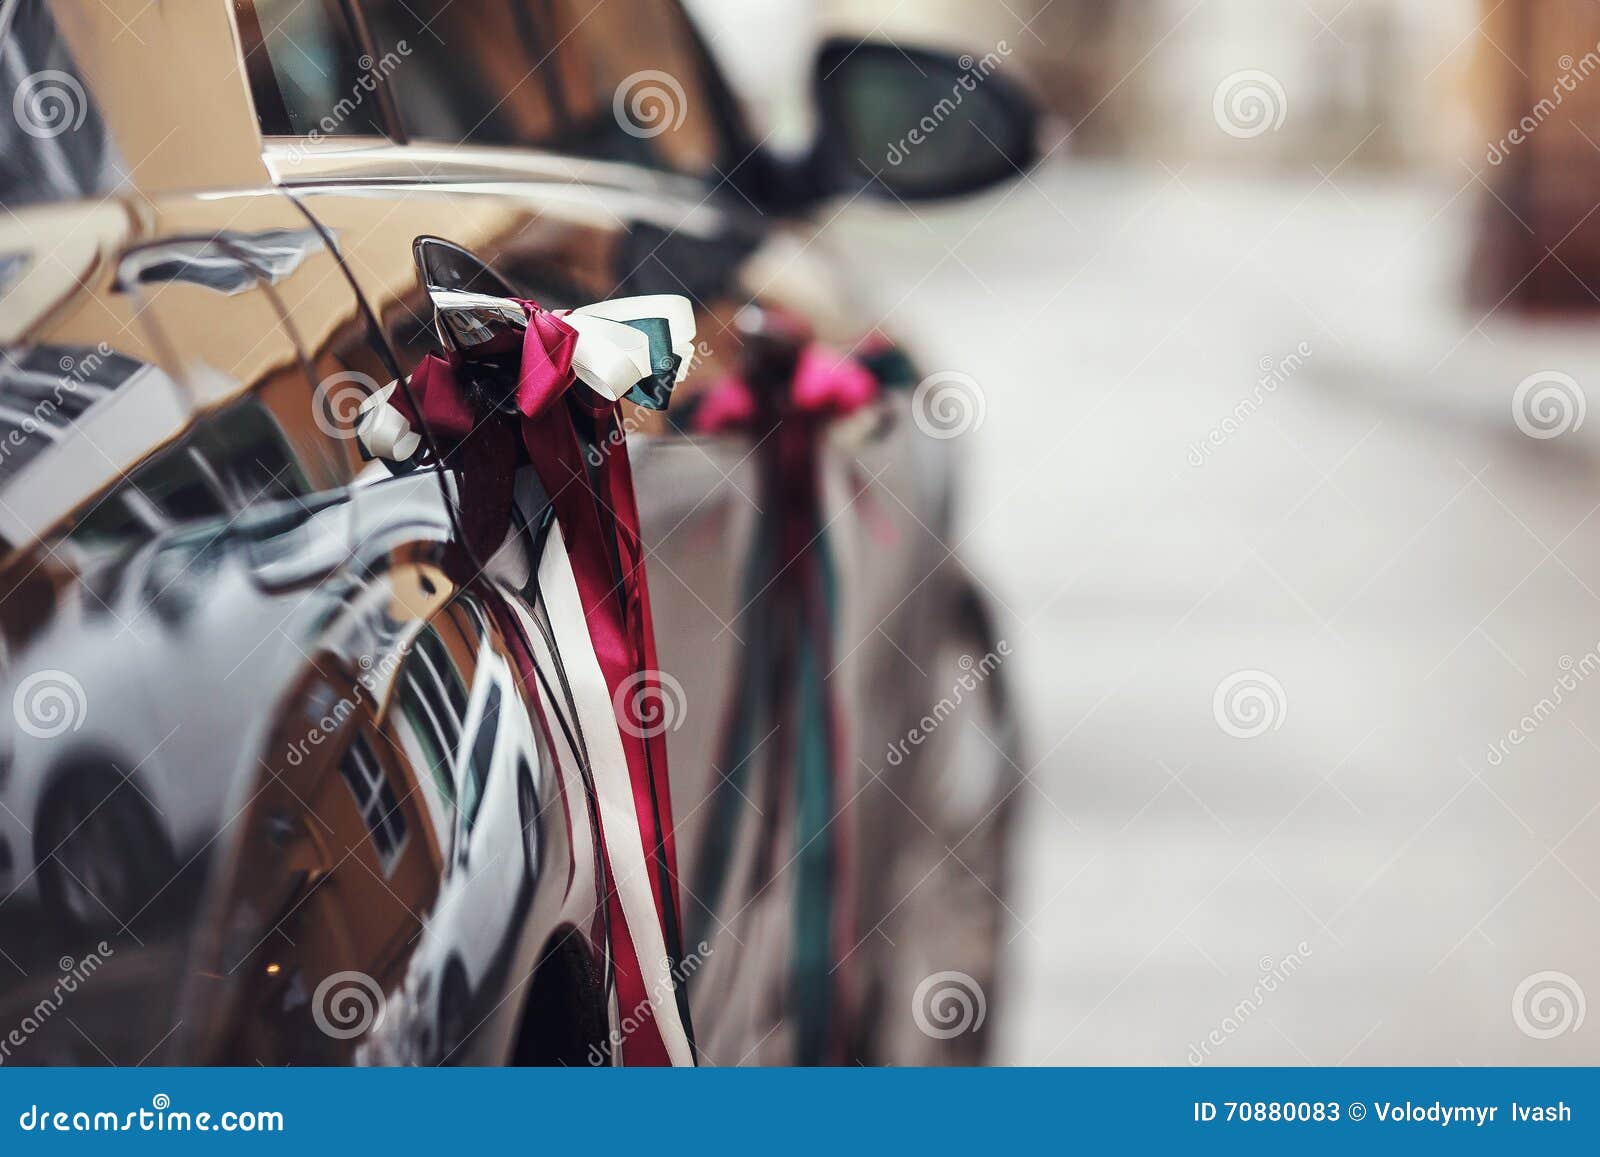 29+ Thousand Car Ribbon Royalty-Free Images, Stock Photos